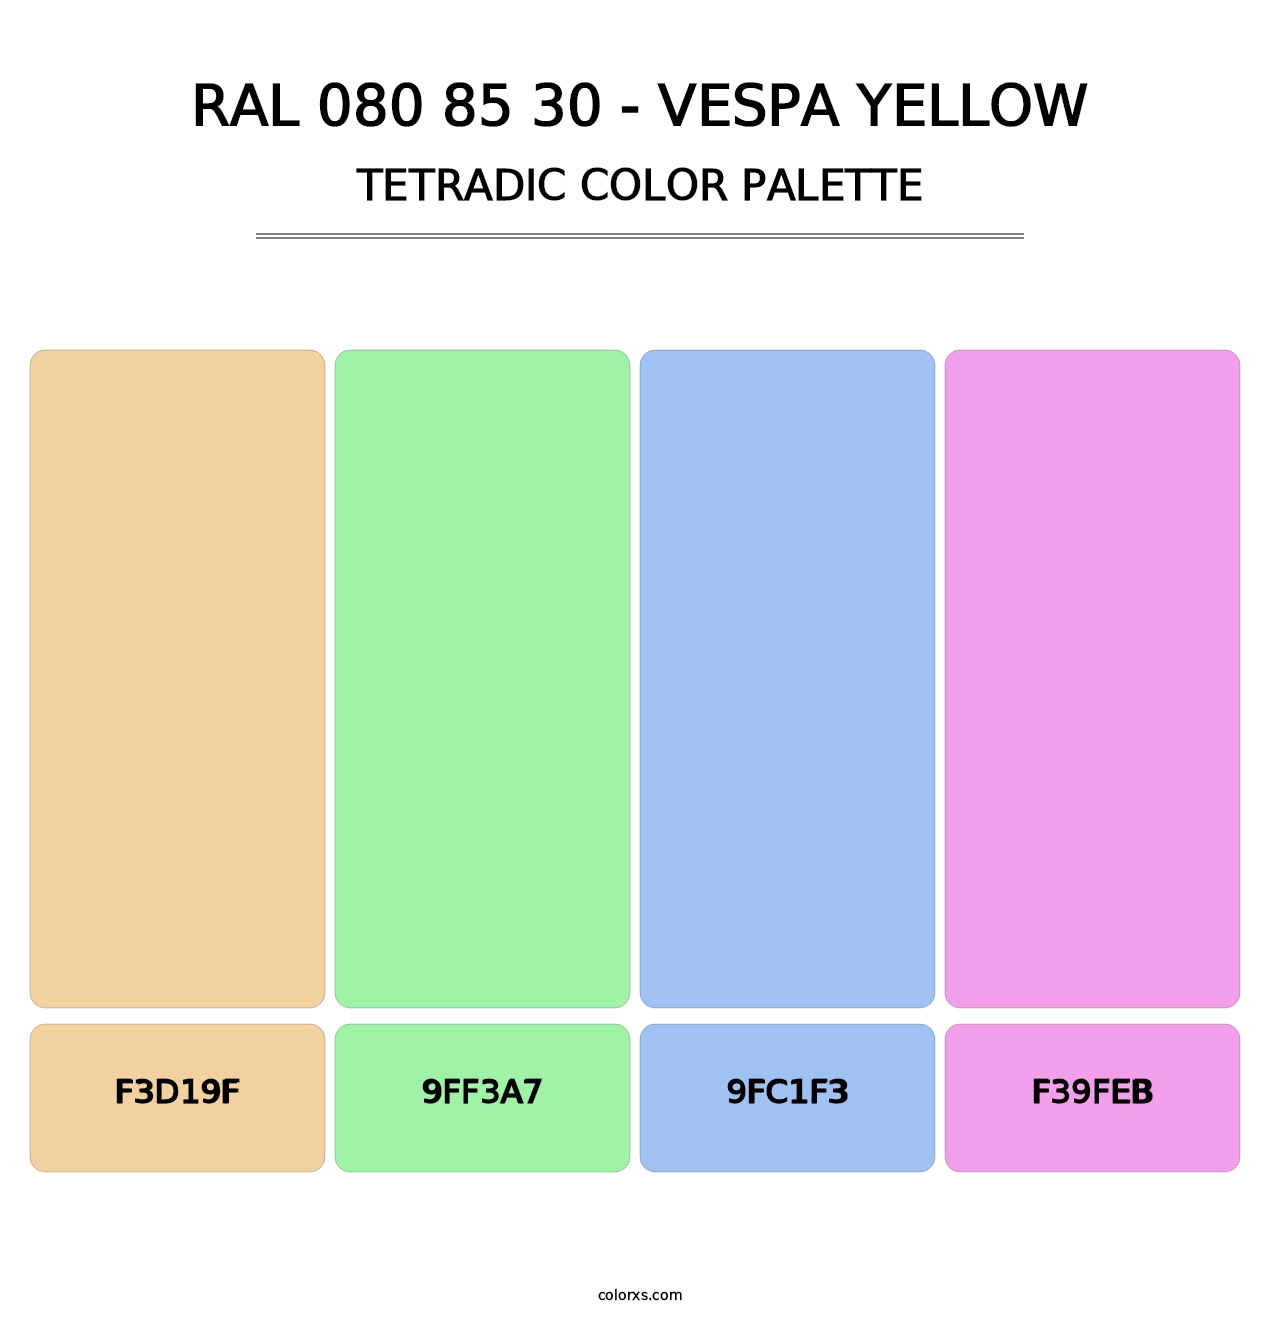 RAL 080 85 30 - Vespa Yellow - Tetradic Color Palette